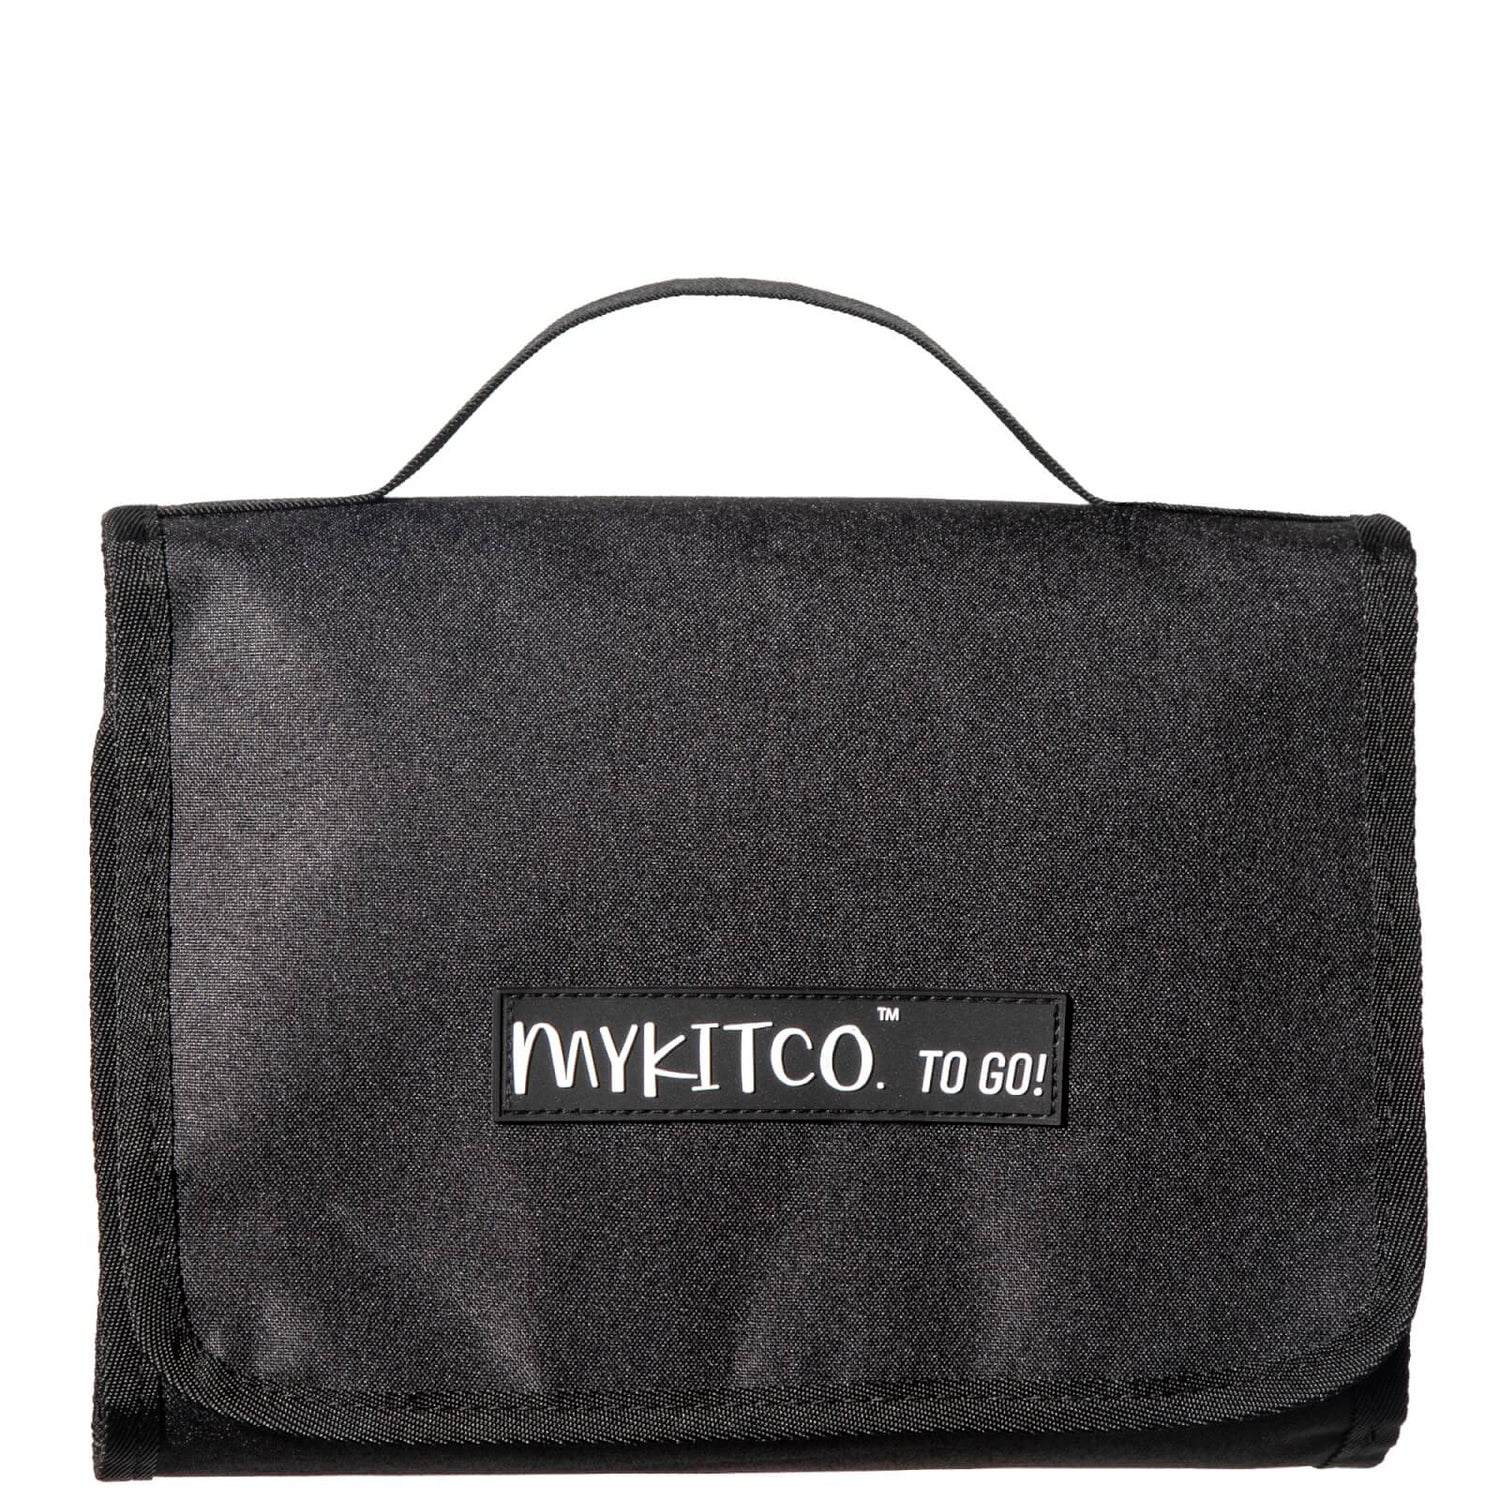 mykitco. to go travel bag